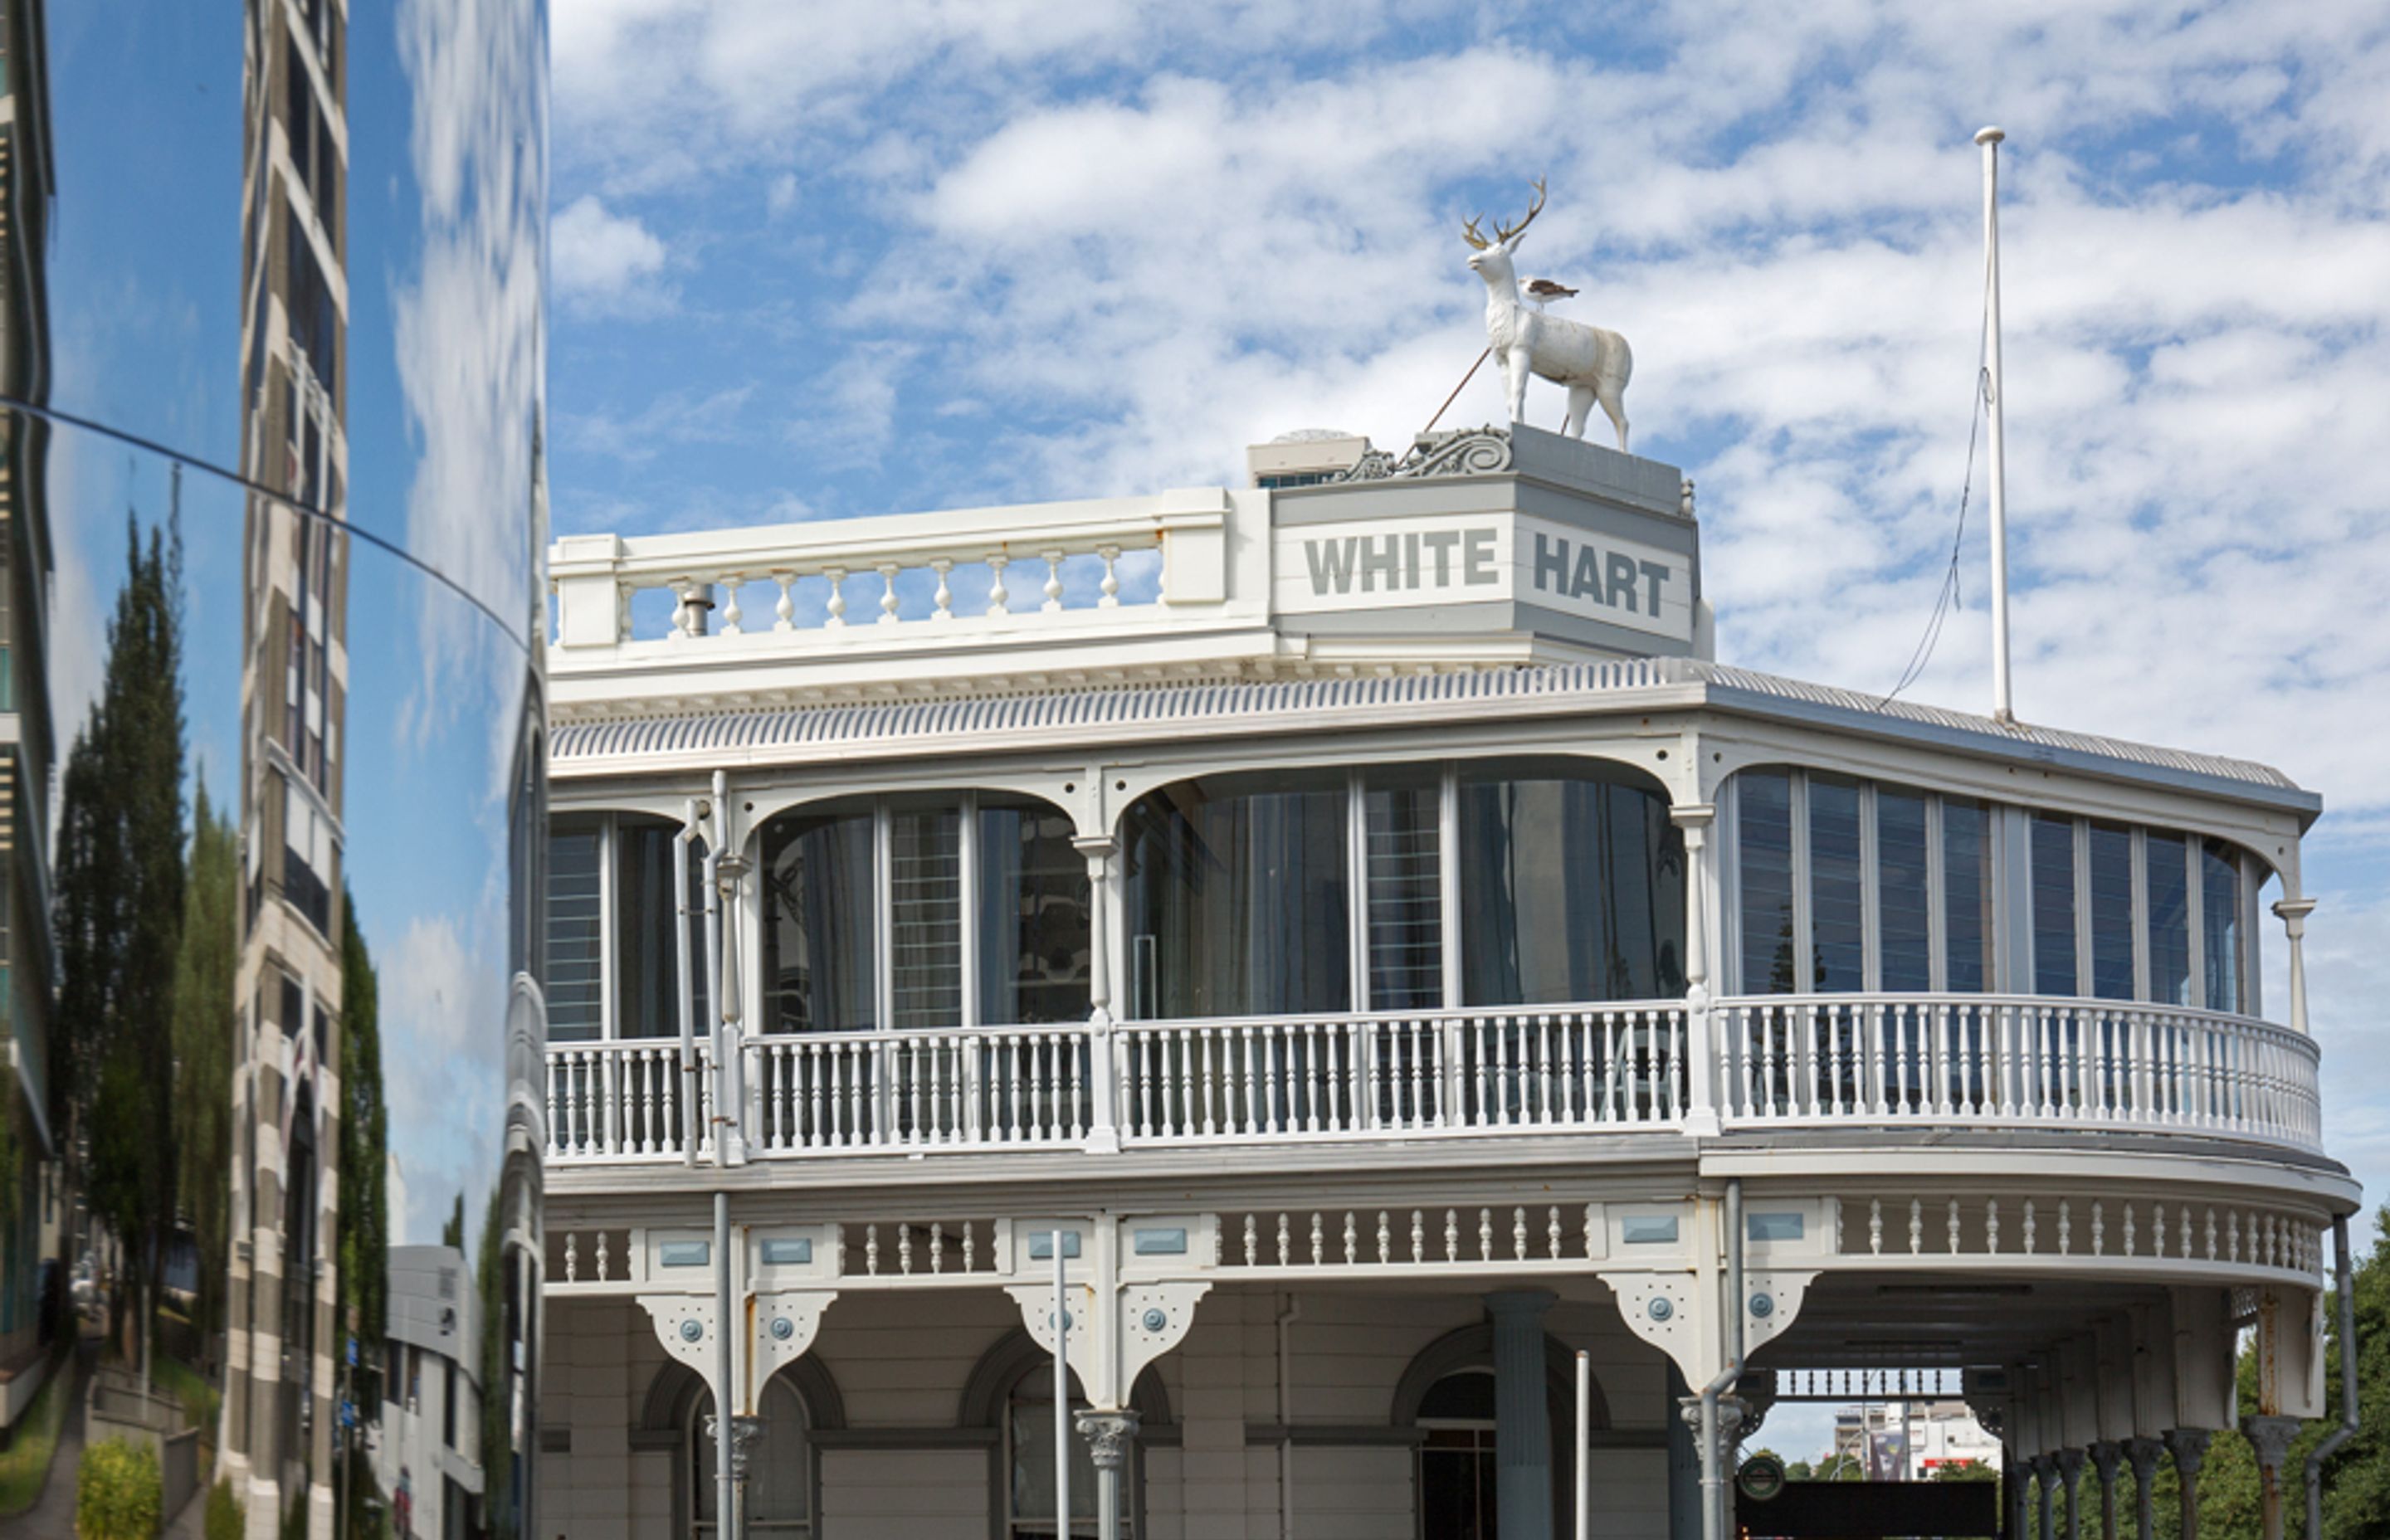 White Hart Hotel by Bonnifait + Giesen.